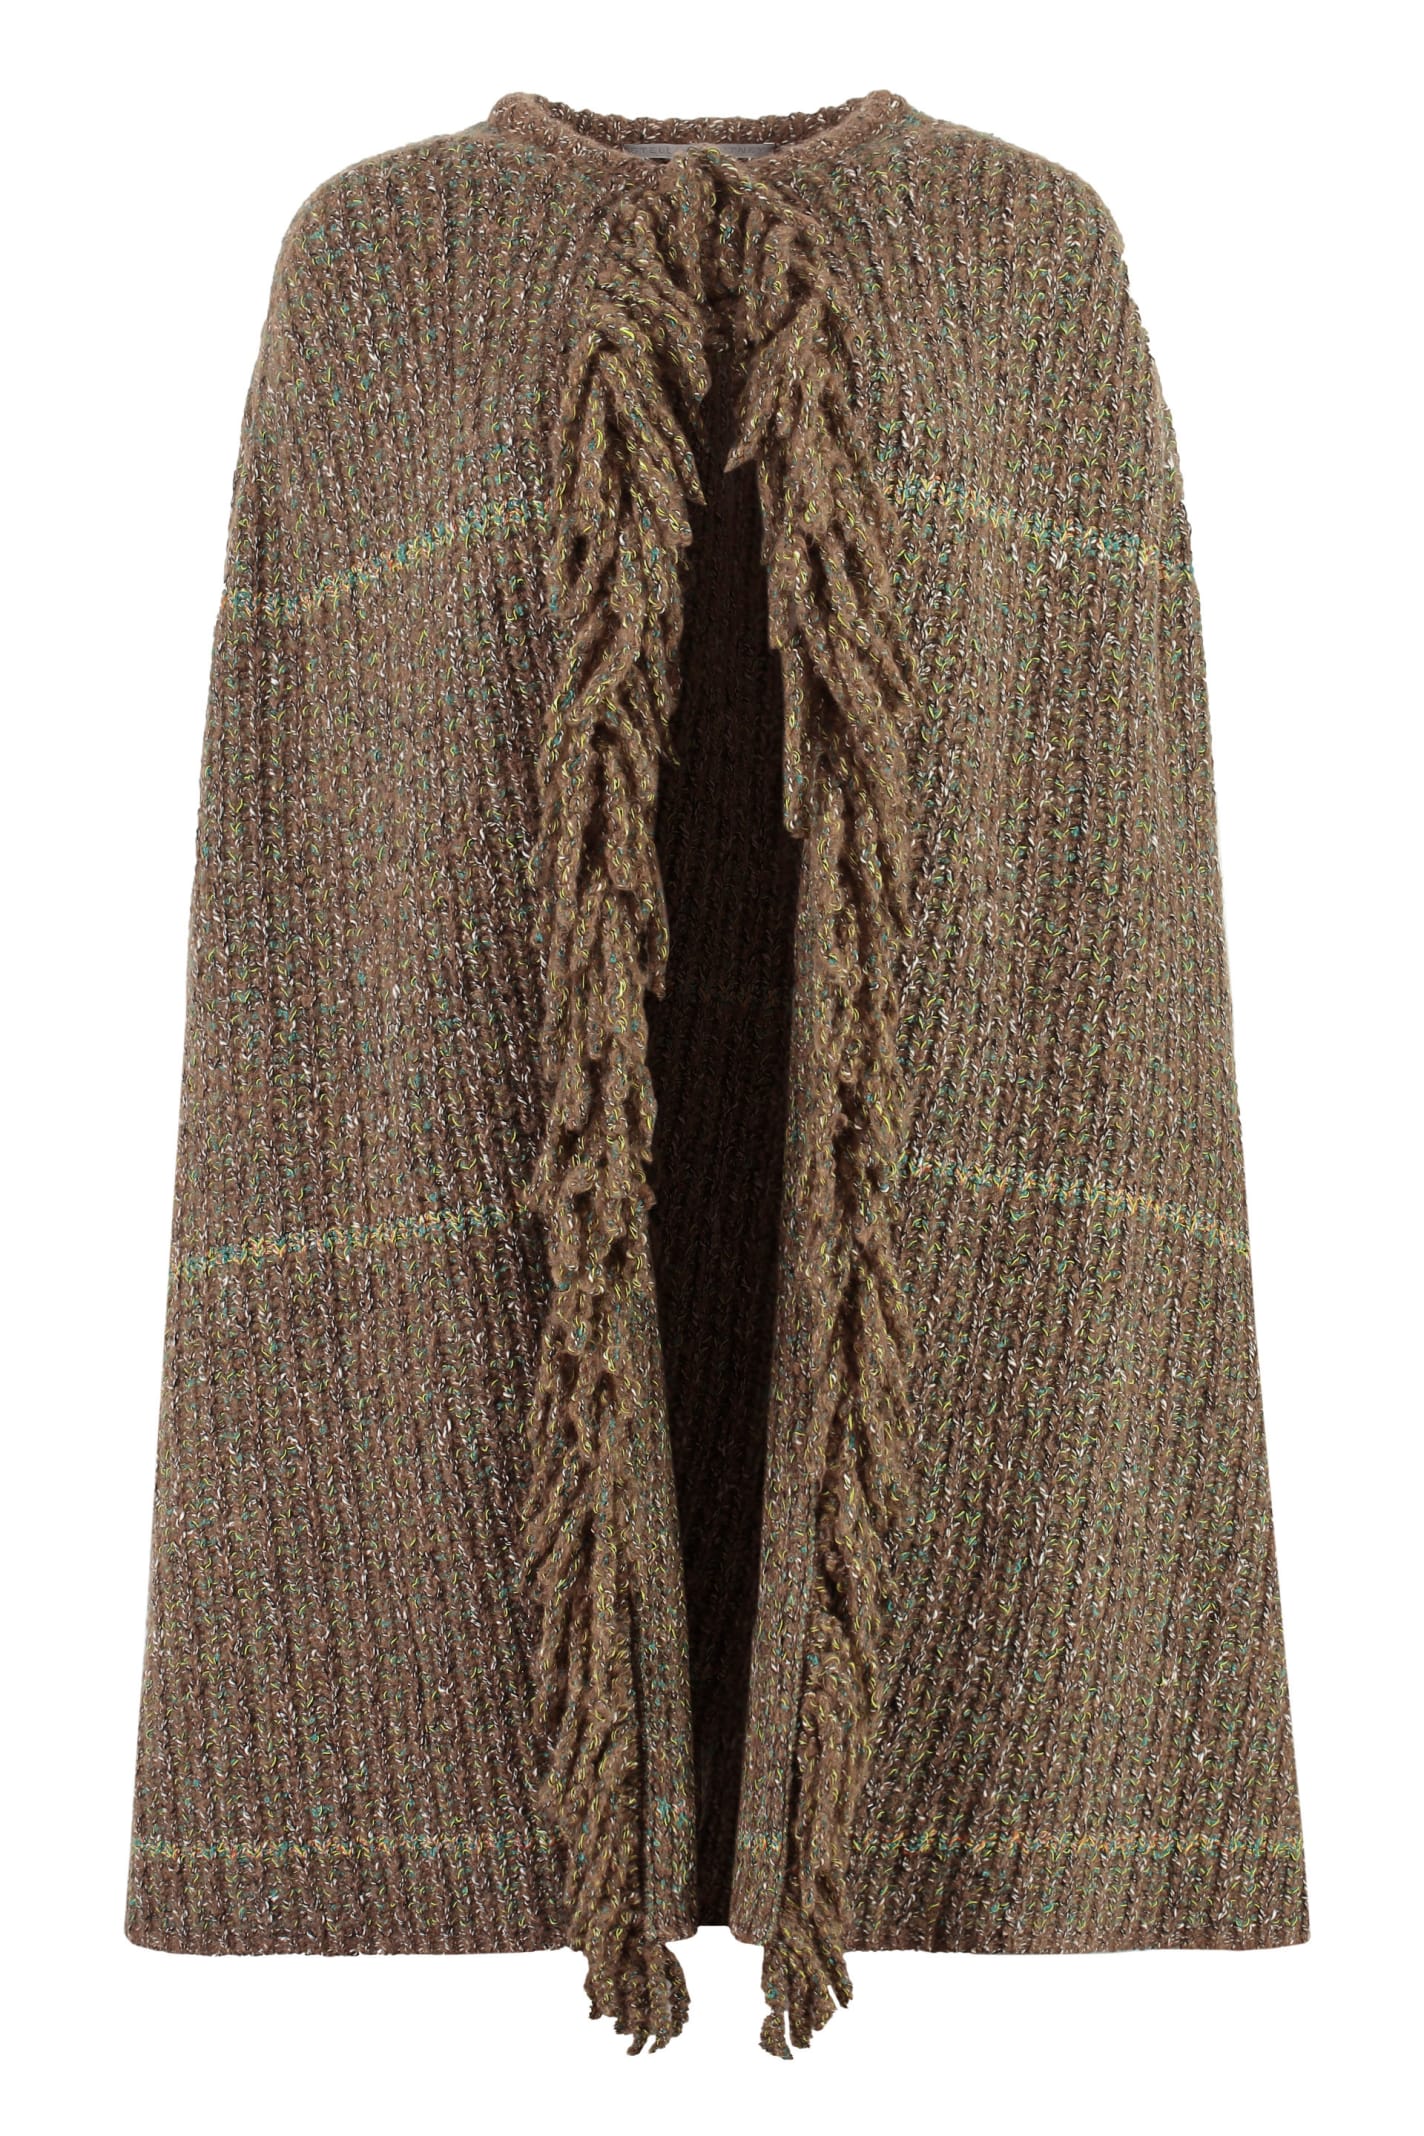 Stella McCartney Knitted Cape Coat